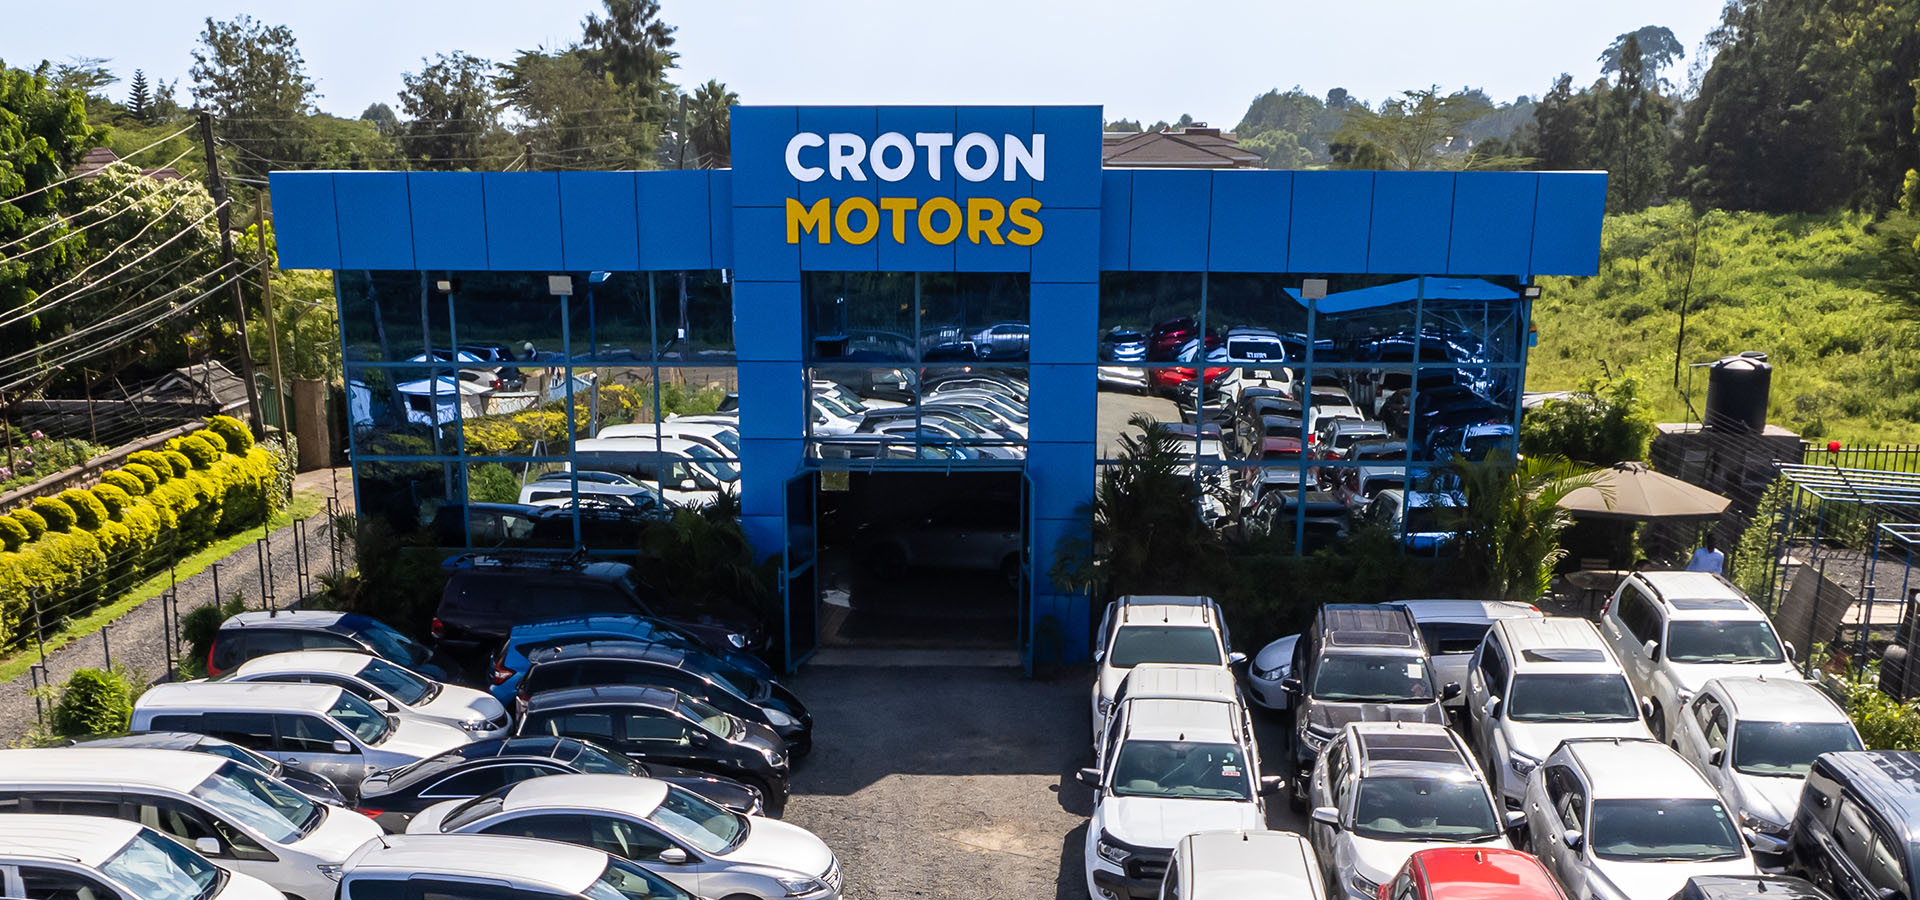 About Croton Motors